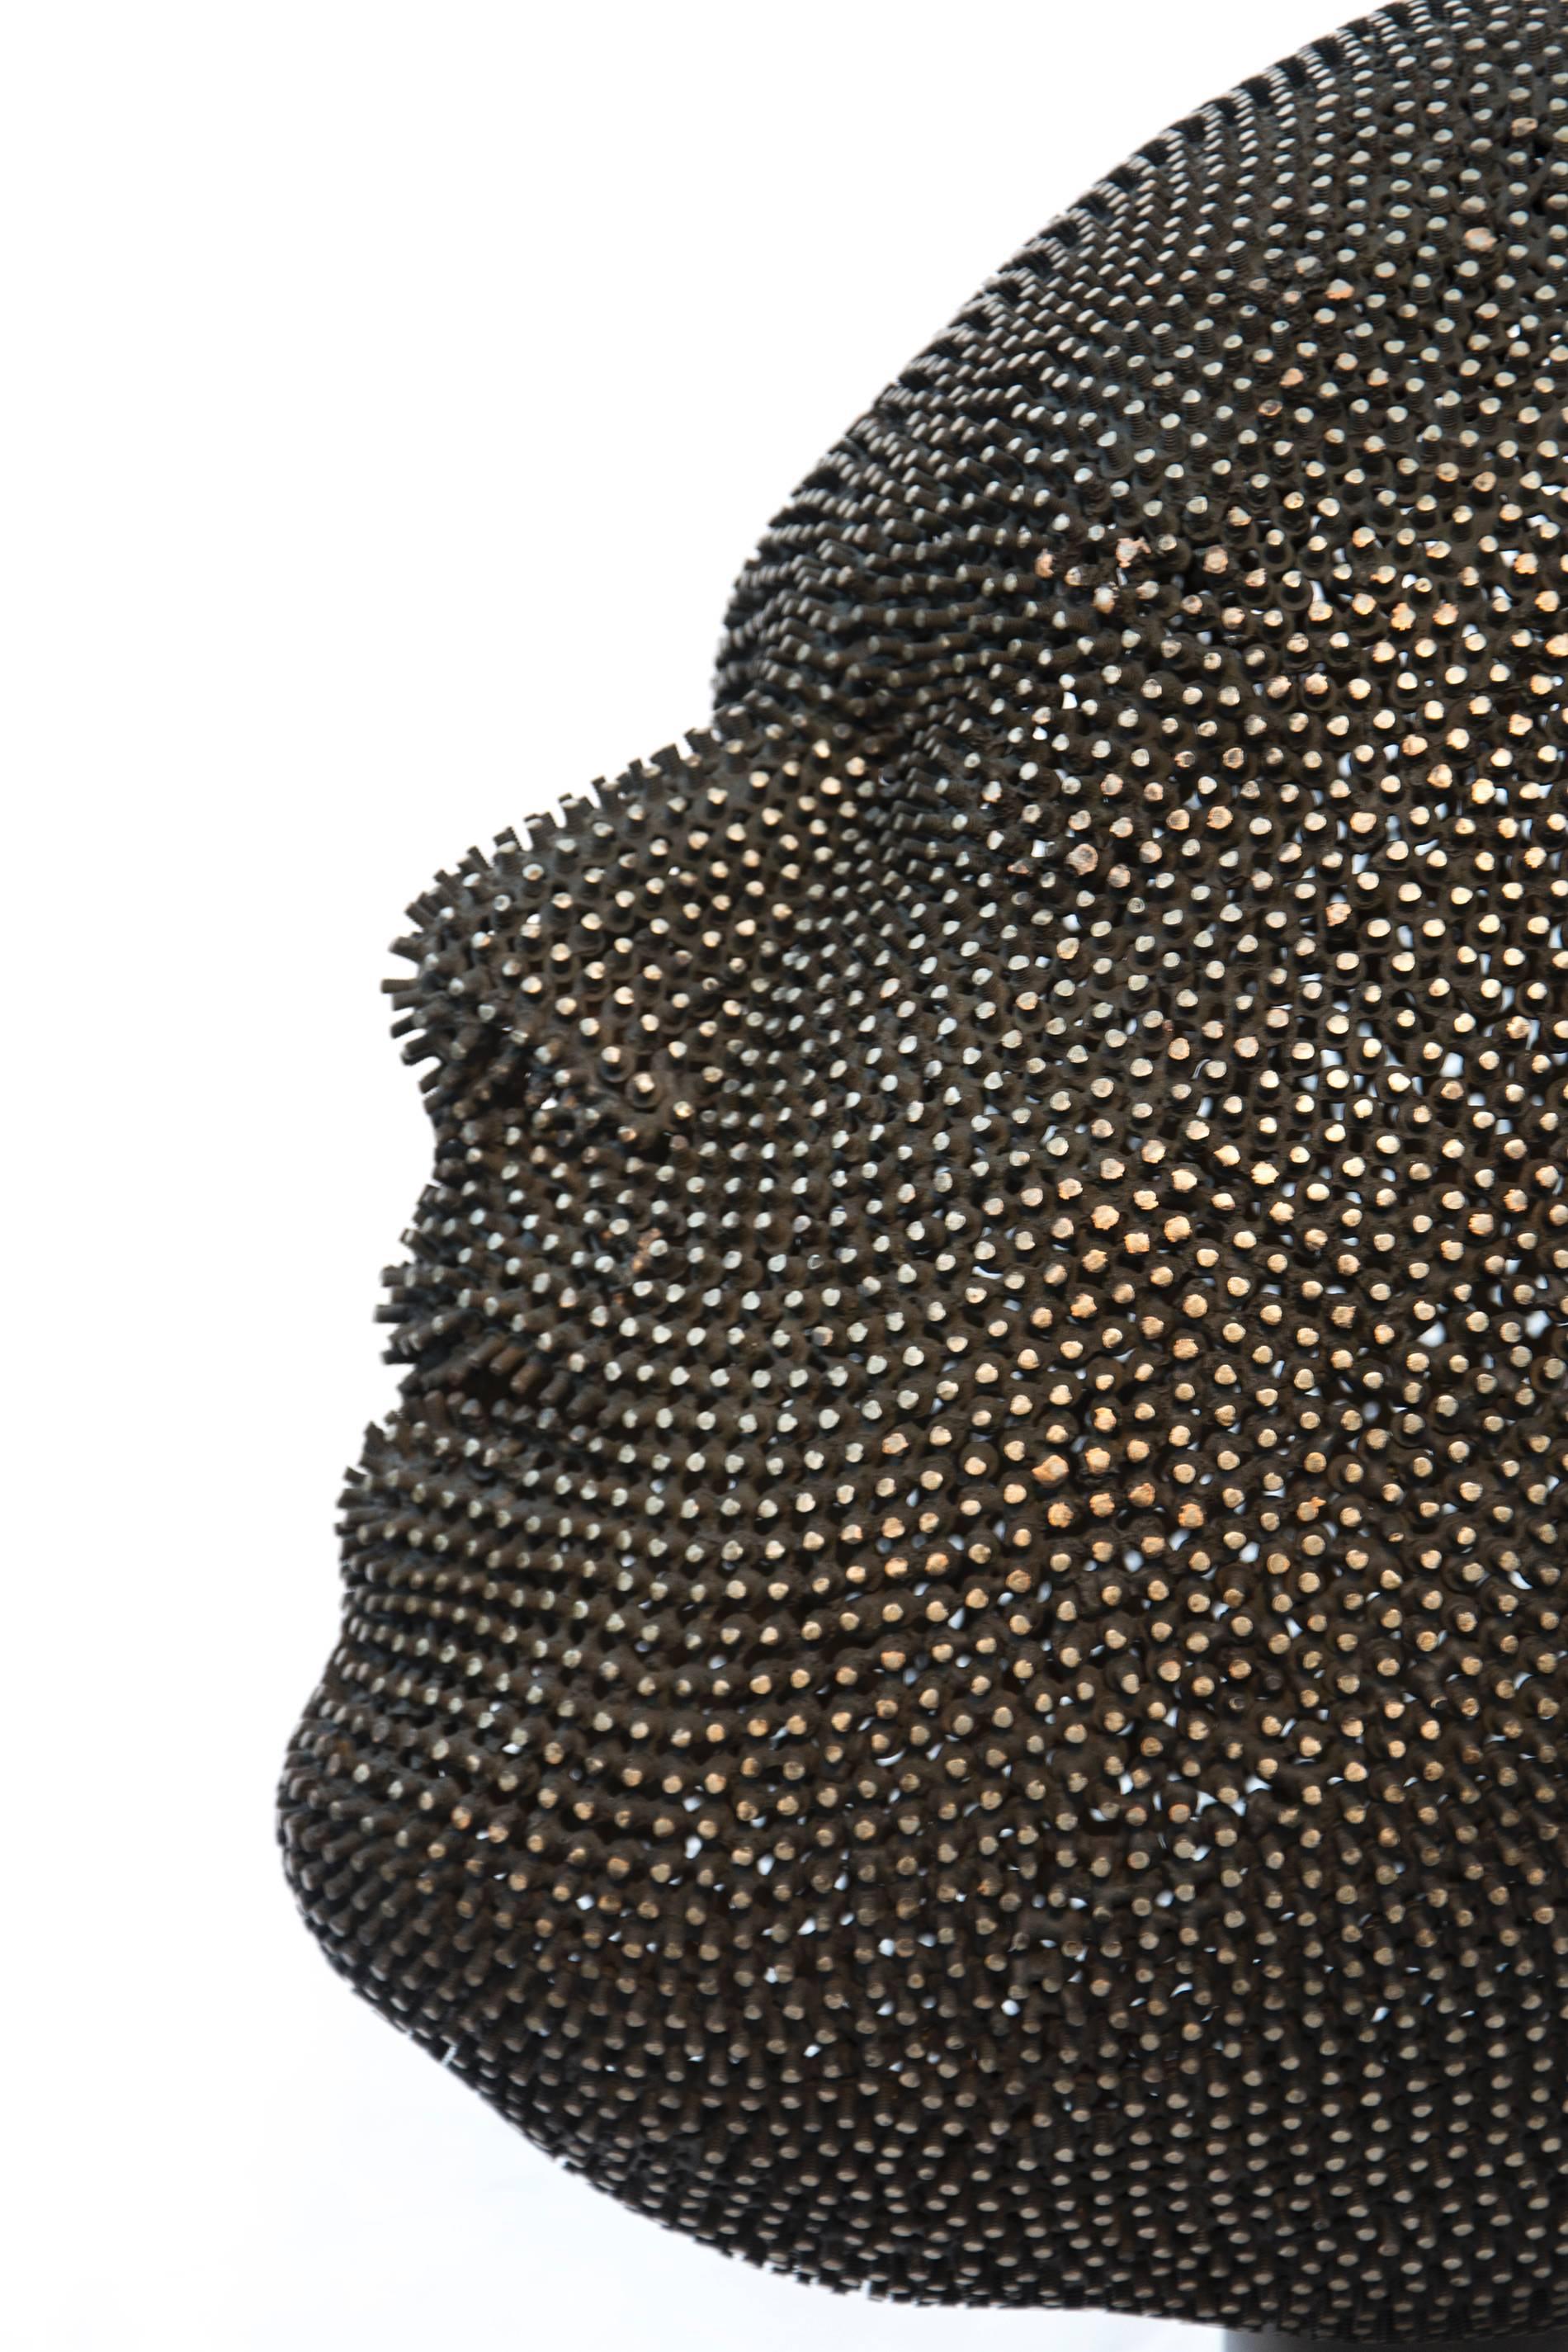 Fibonacci Dream - Black Figurative Sculpture by Dale Dunning